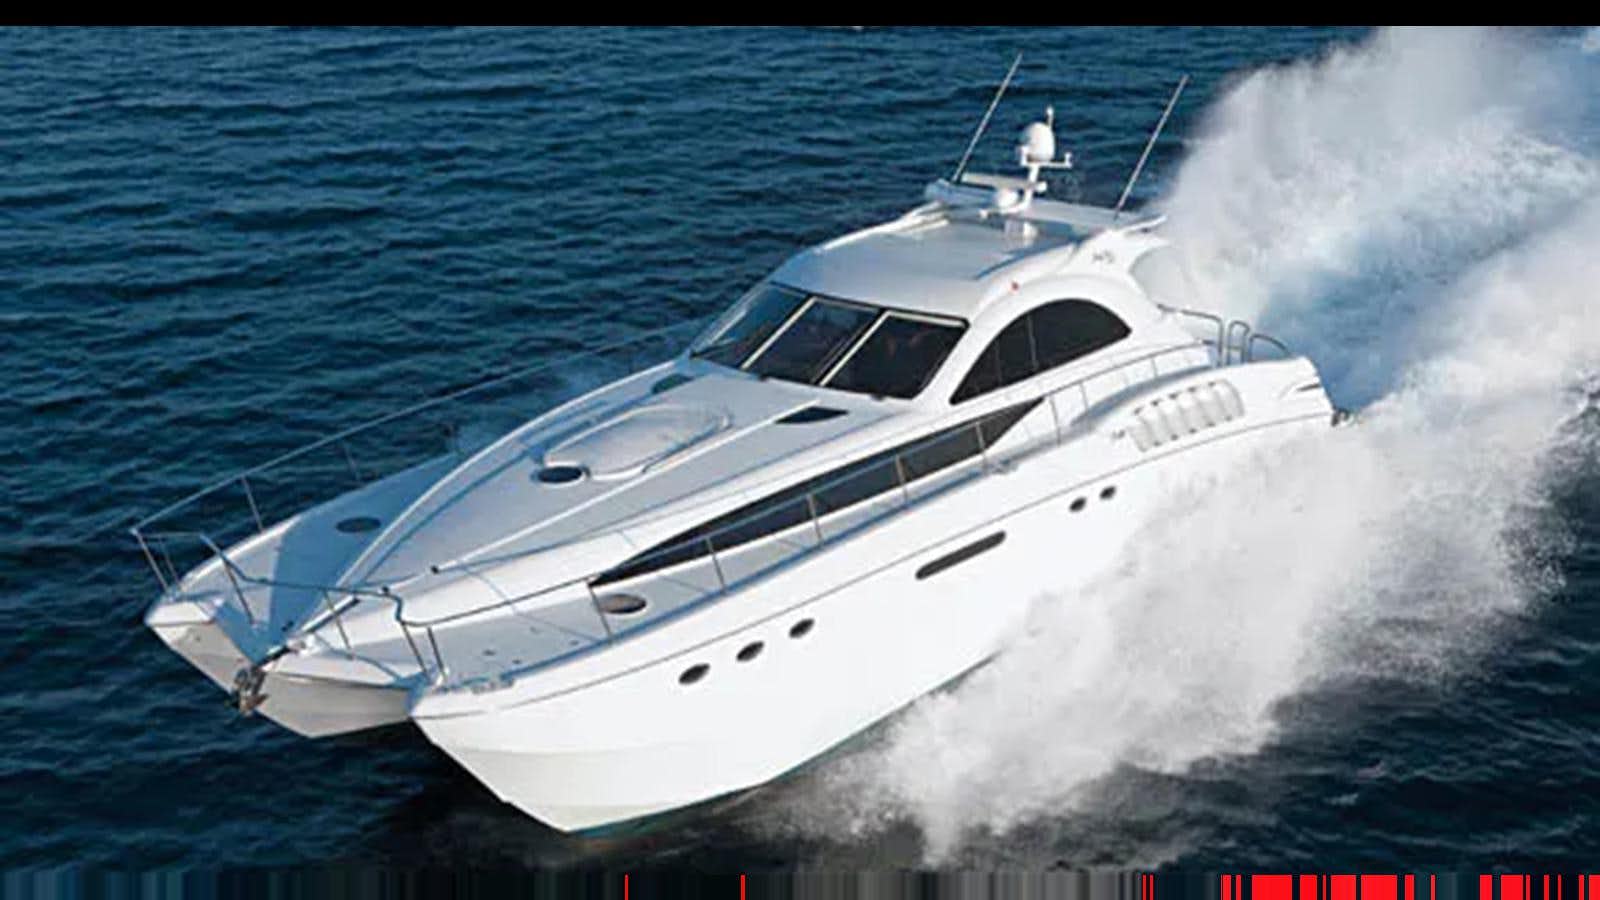 2020 axcell 650 power catamaran
Yacht for Sale